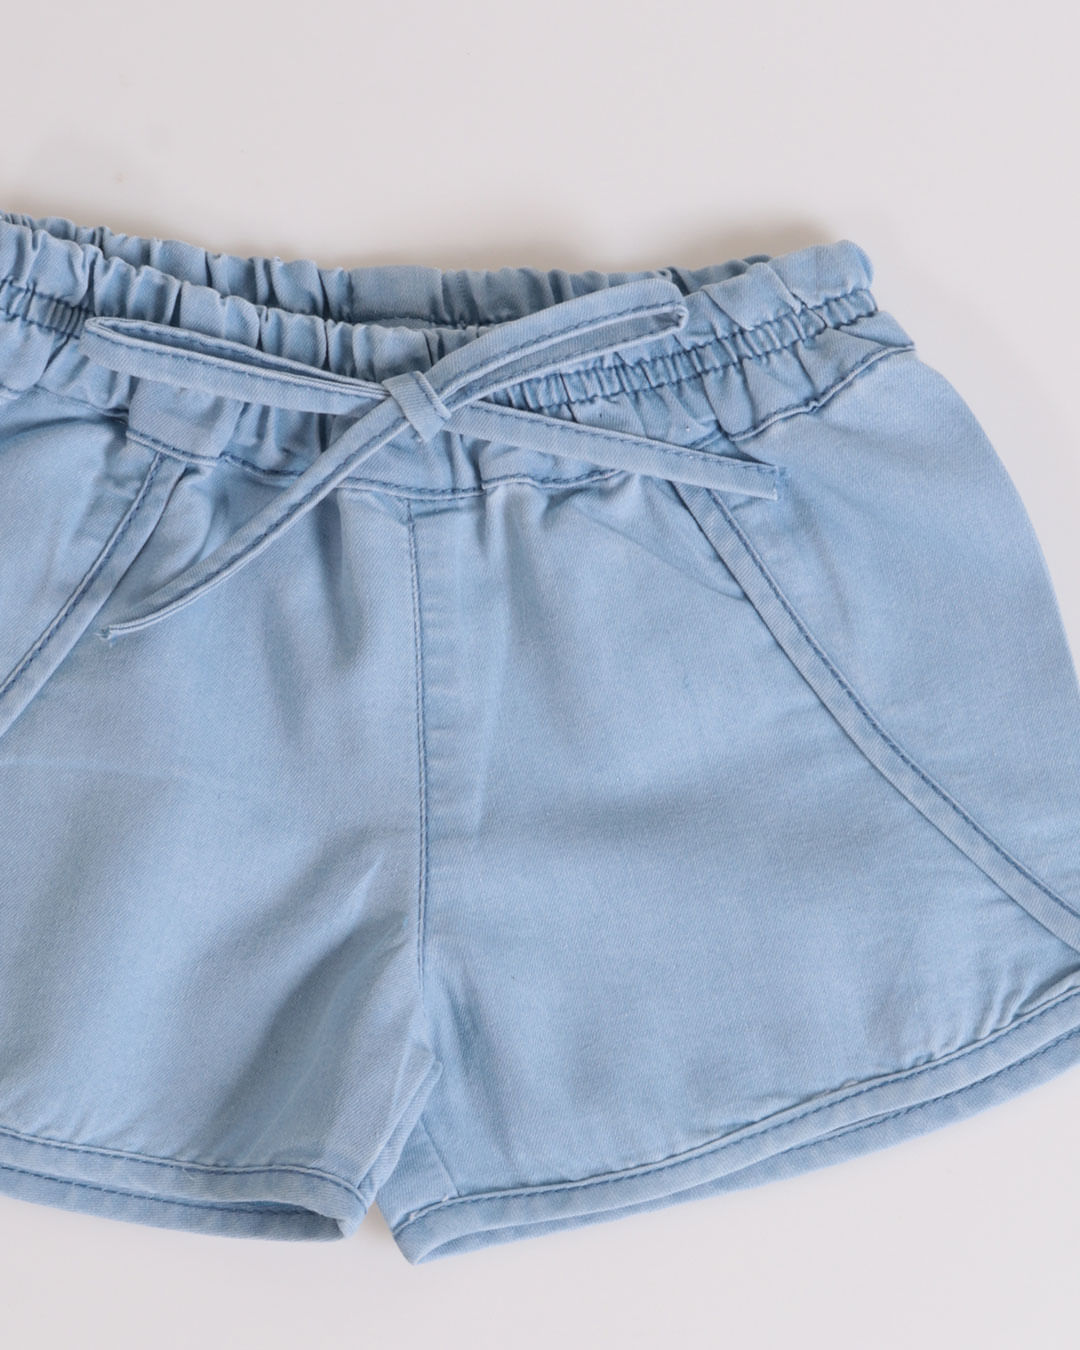 Shorts-Chambray--Lm-Fem-13---Blue-Jeans-Claro